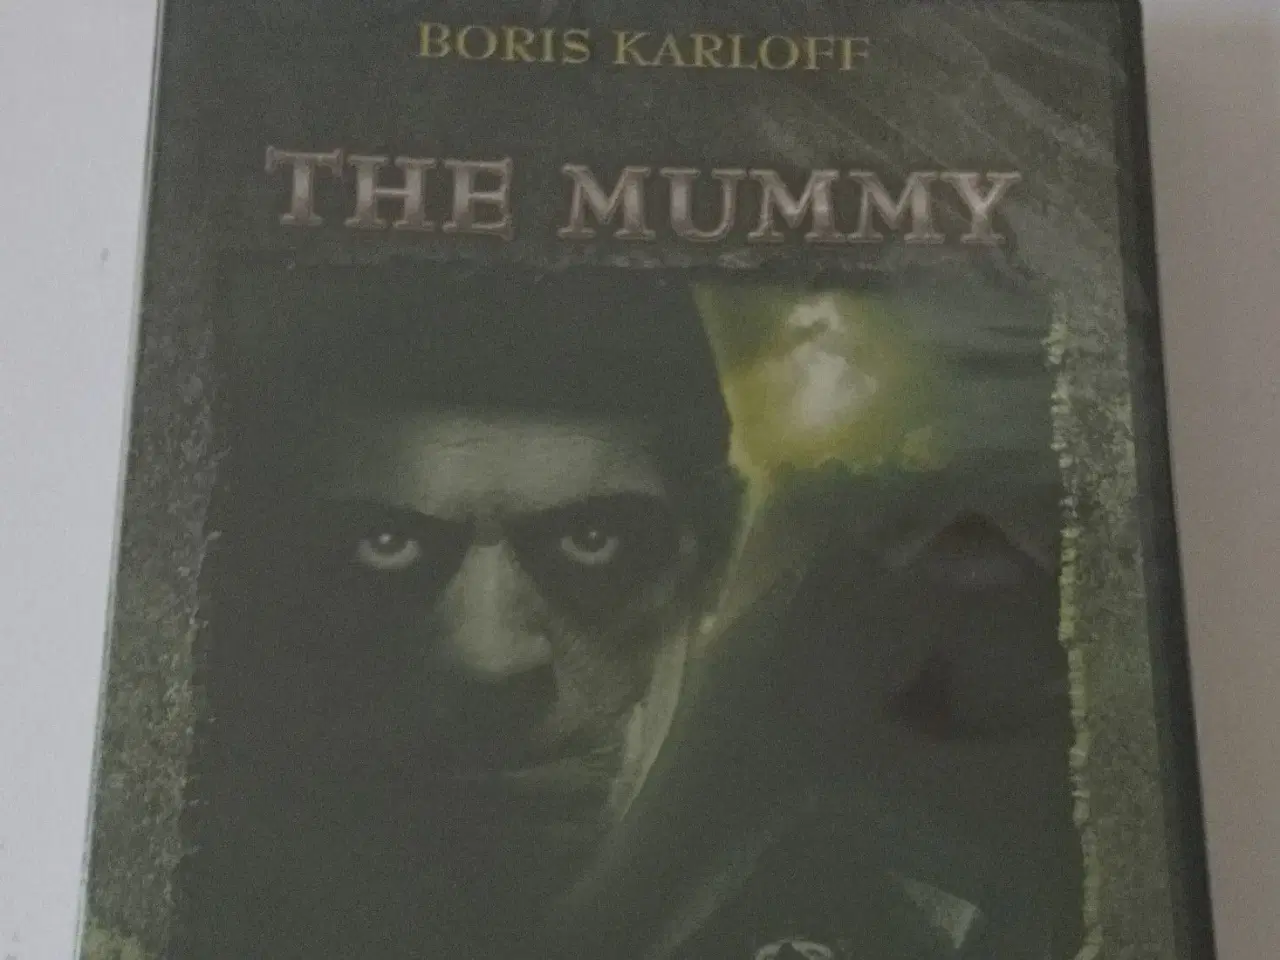 Billede 1 - The Mummy m/ Boris Karloff, instruktør Karl Freund